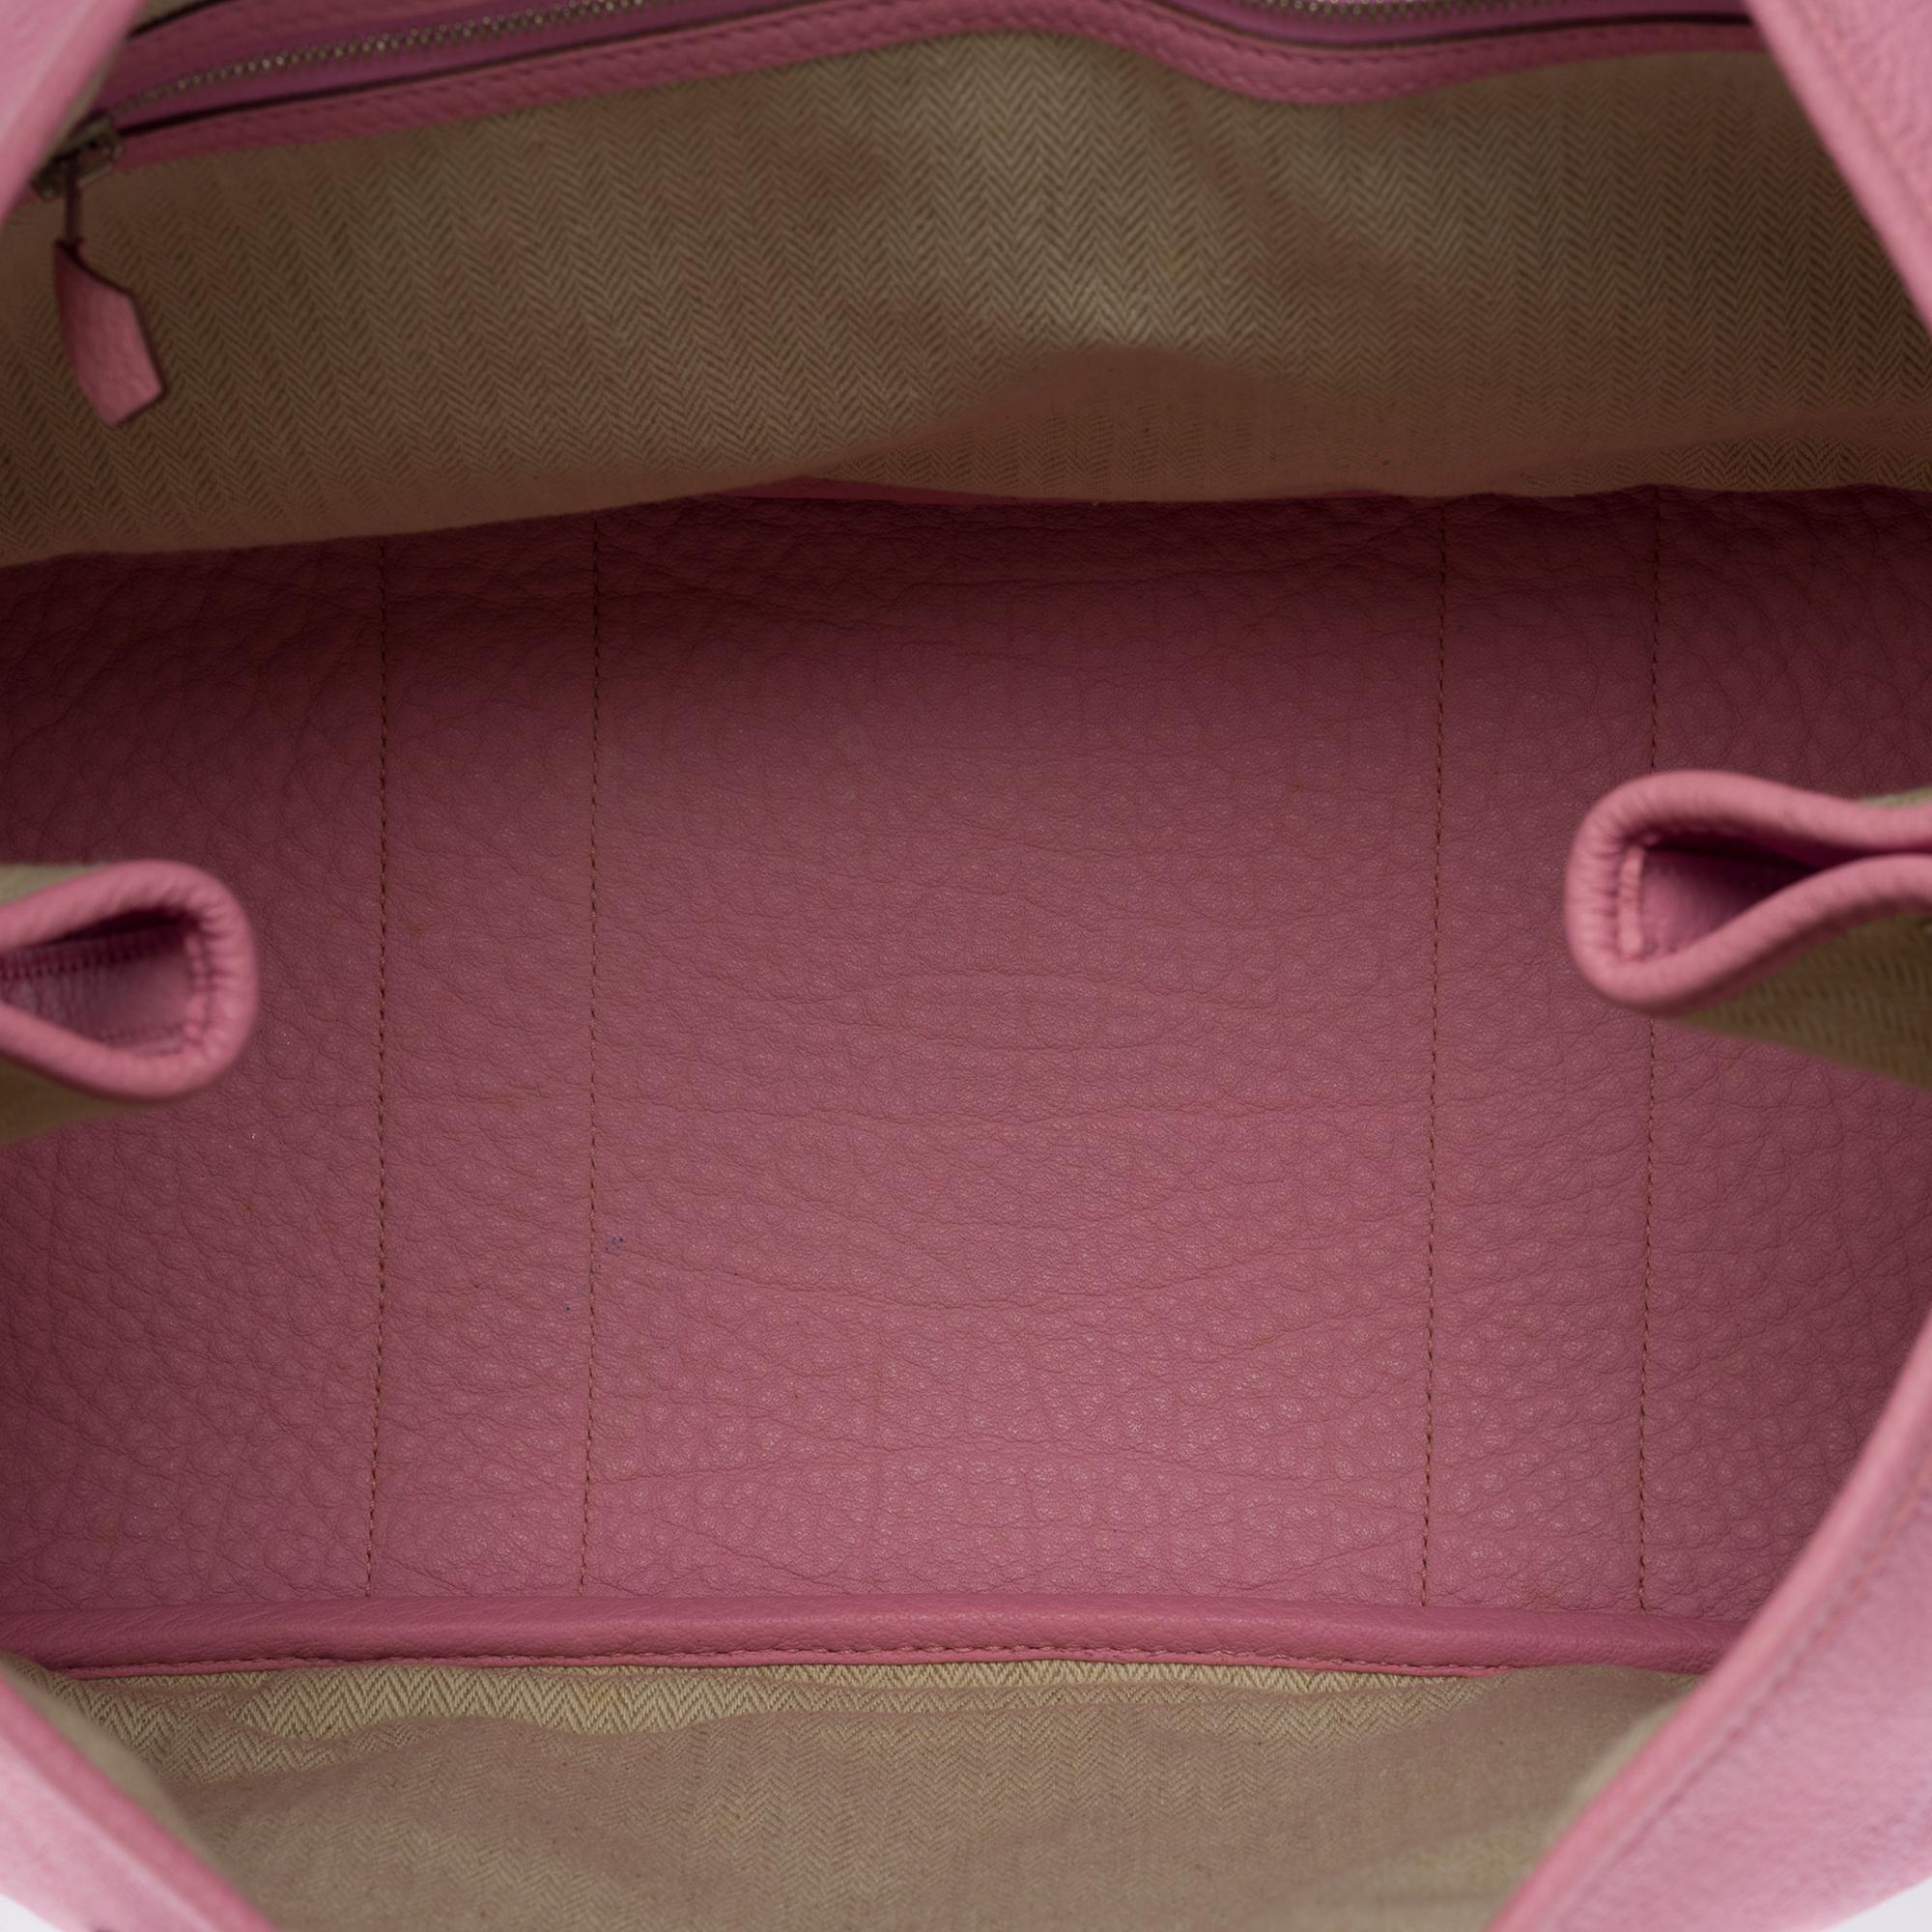 Gorgeous Hermès Garden Party 36 Tote bag in Sakura Pink Negonda leather, SHW 3